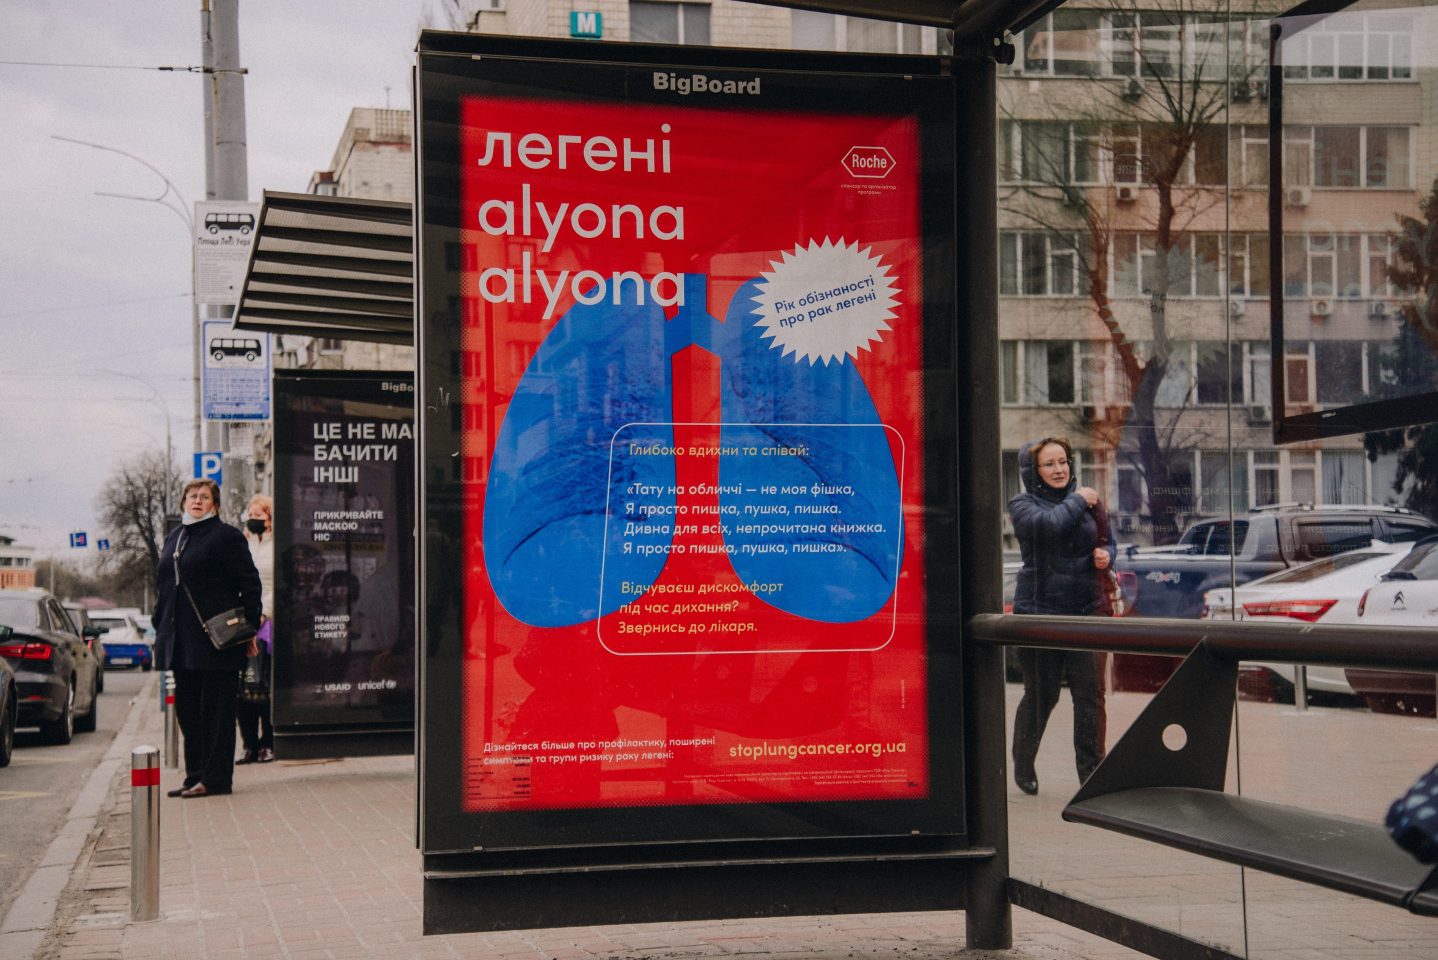 alyona alyona стала «легенями» соціального проєкту про рак легені